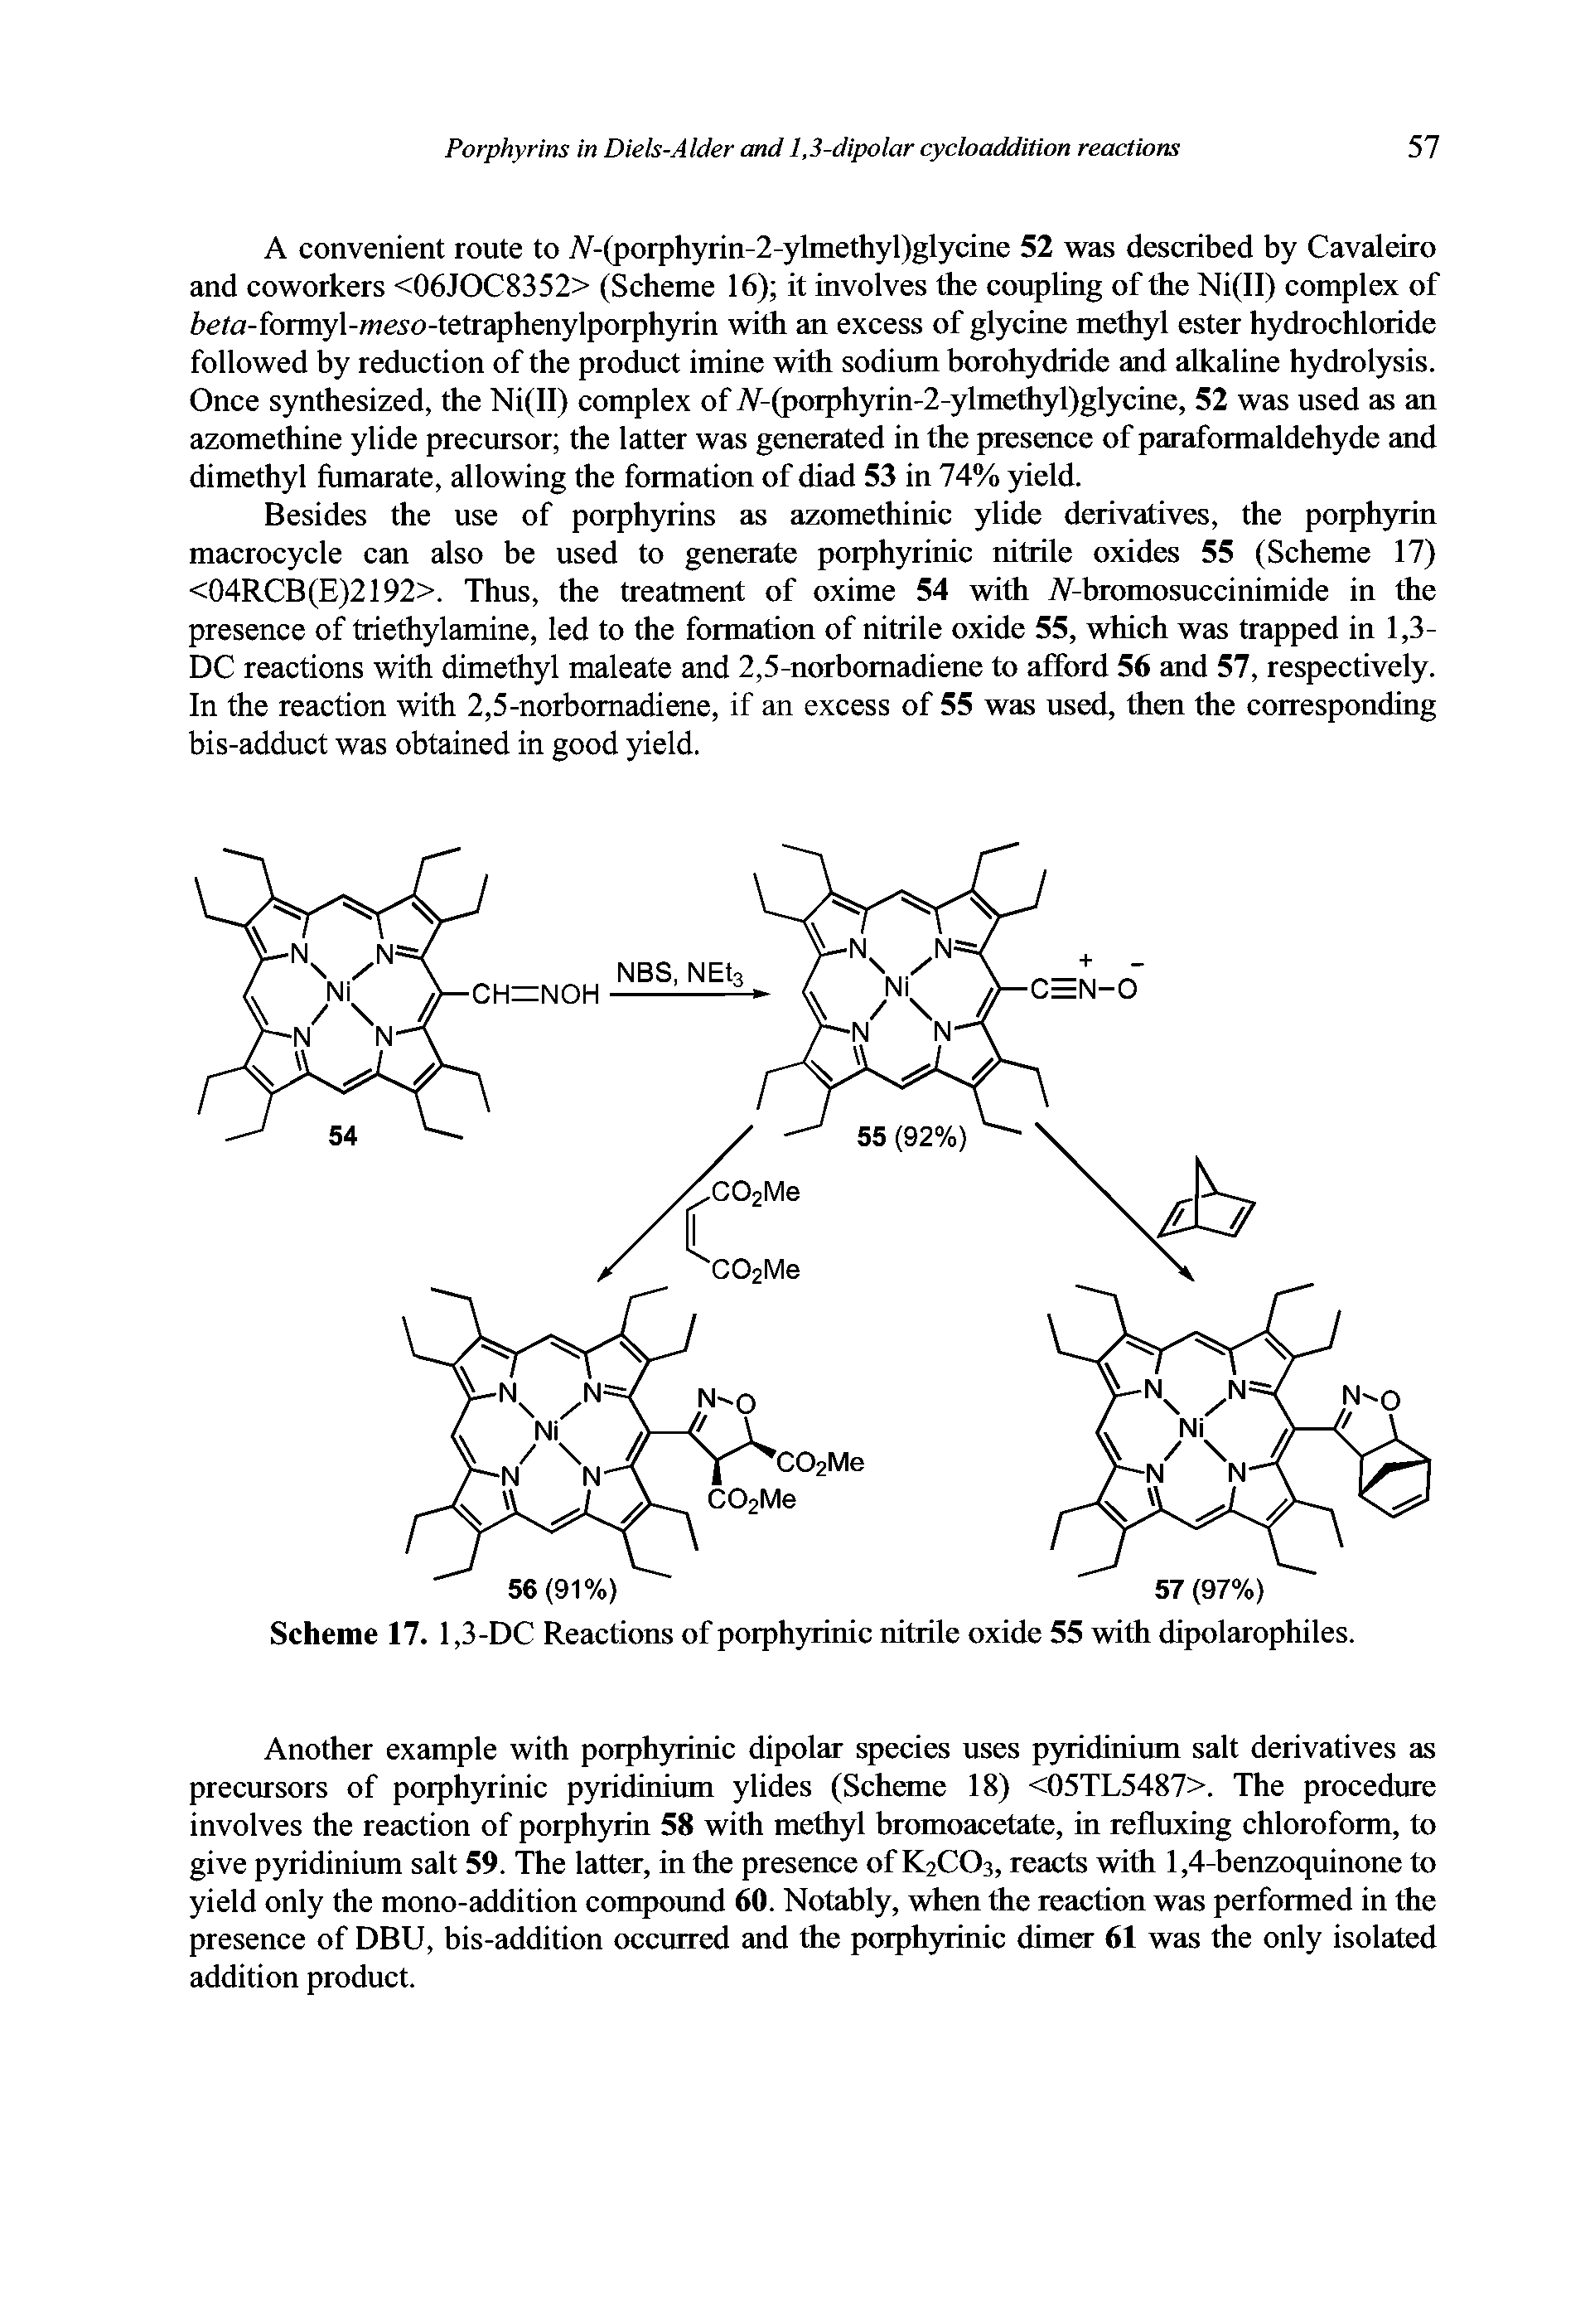 Scheme 17. 1,3-DC Reactions of porphyrinic nitrile oxide 55 with dipolarophiles.